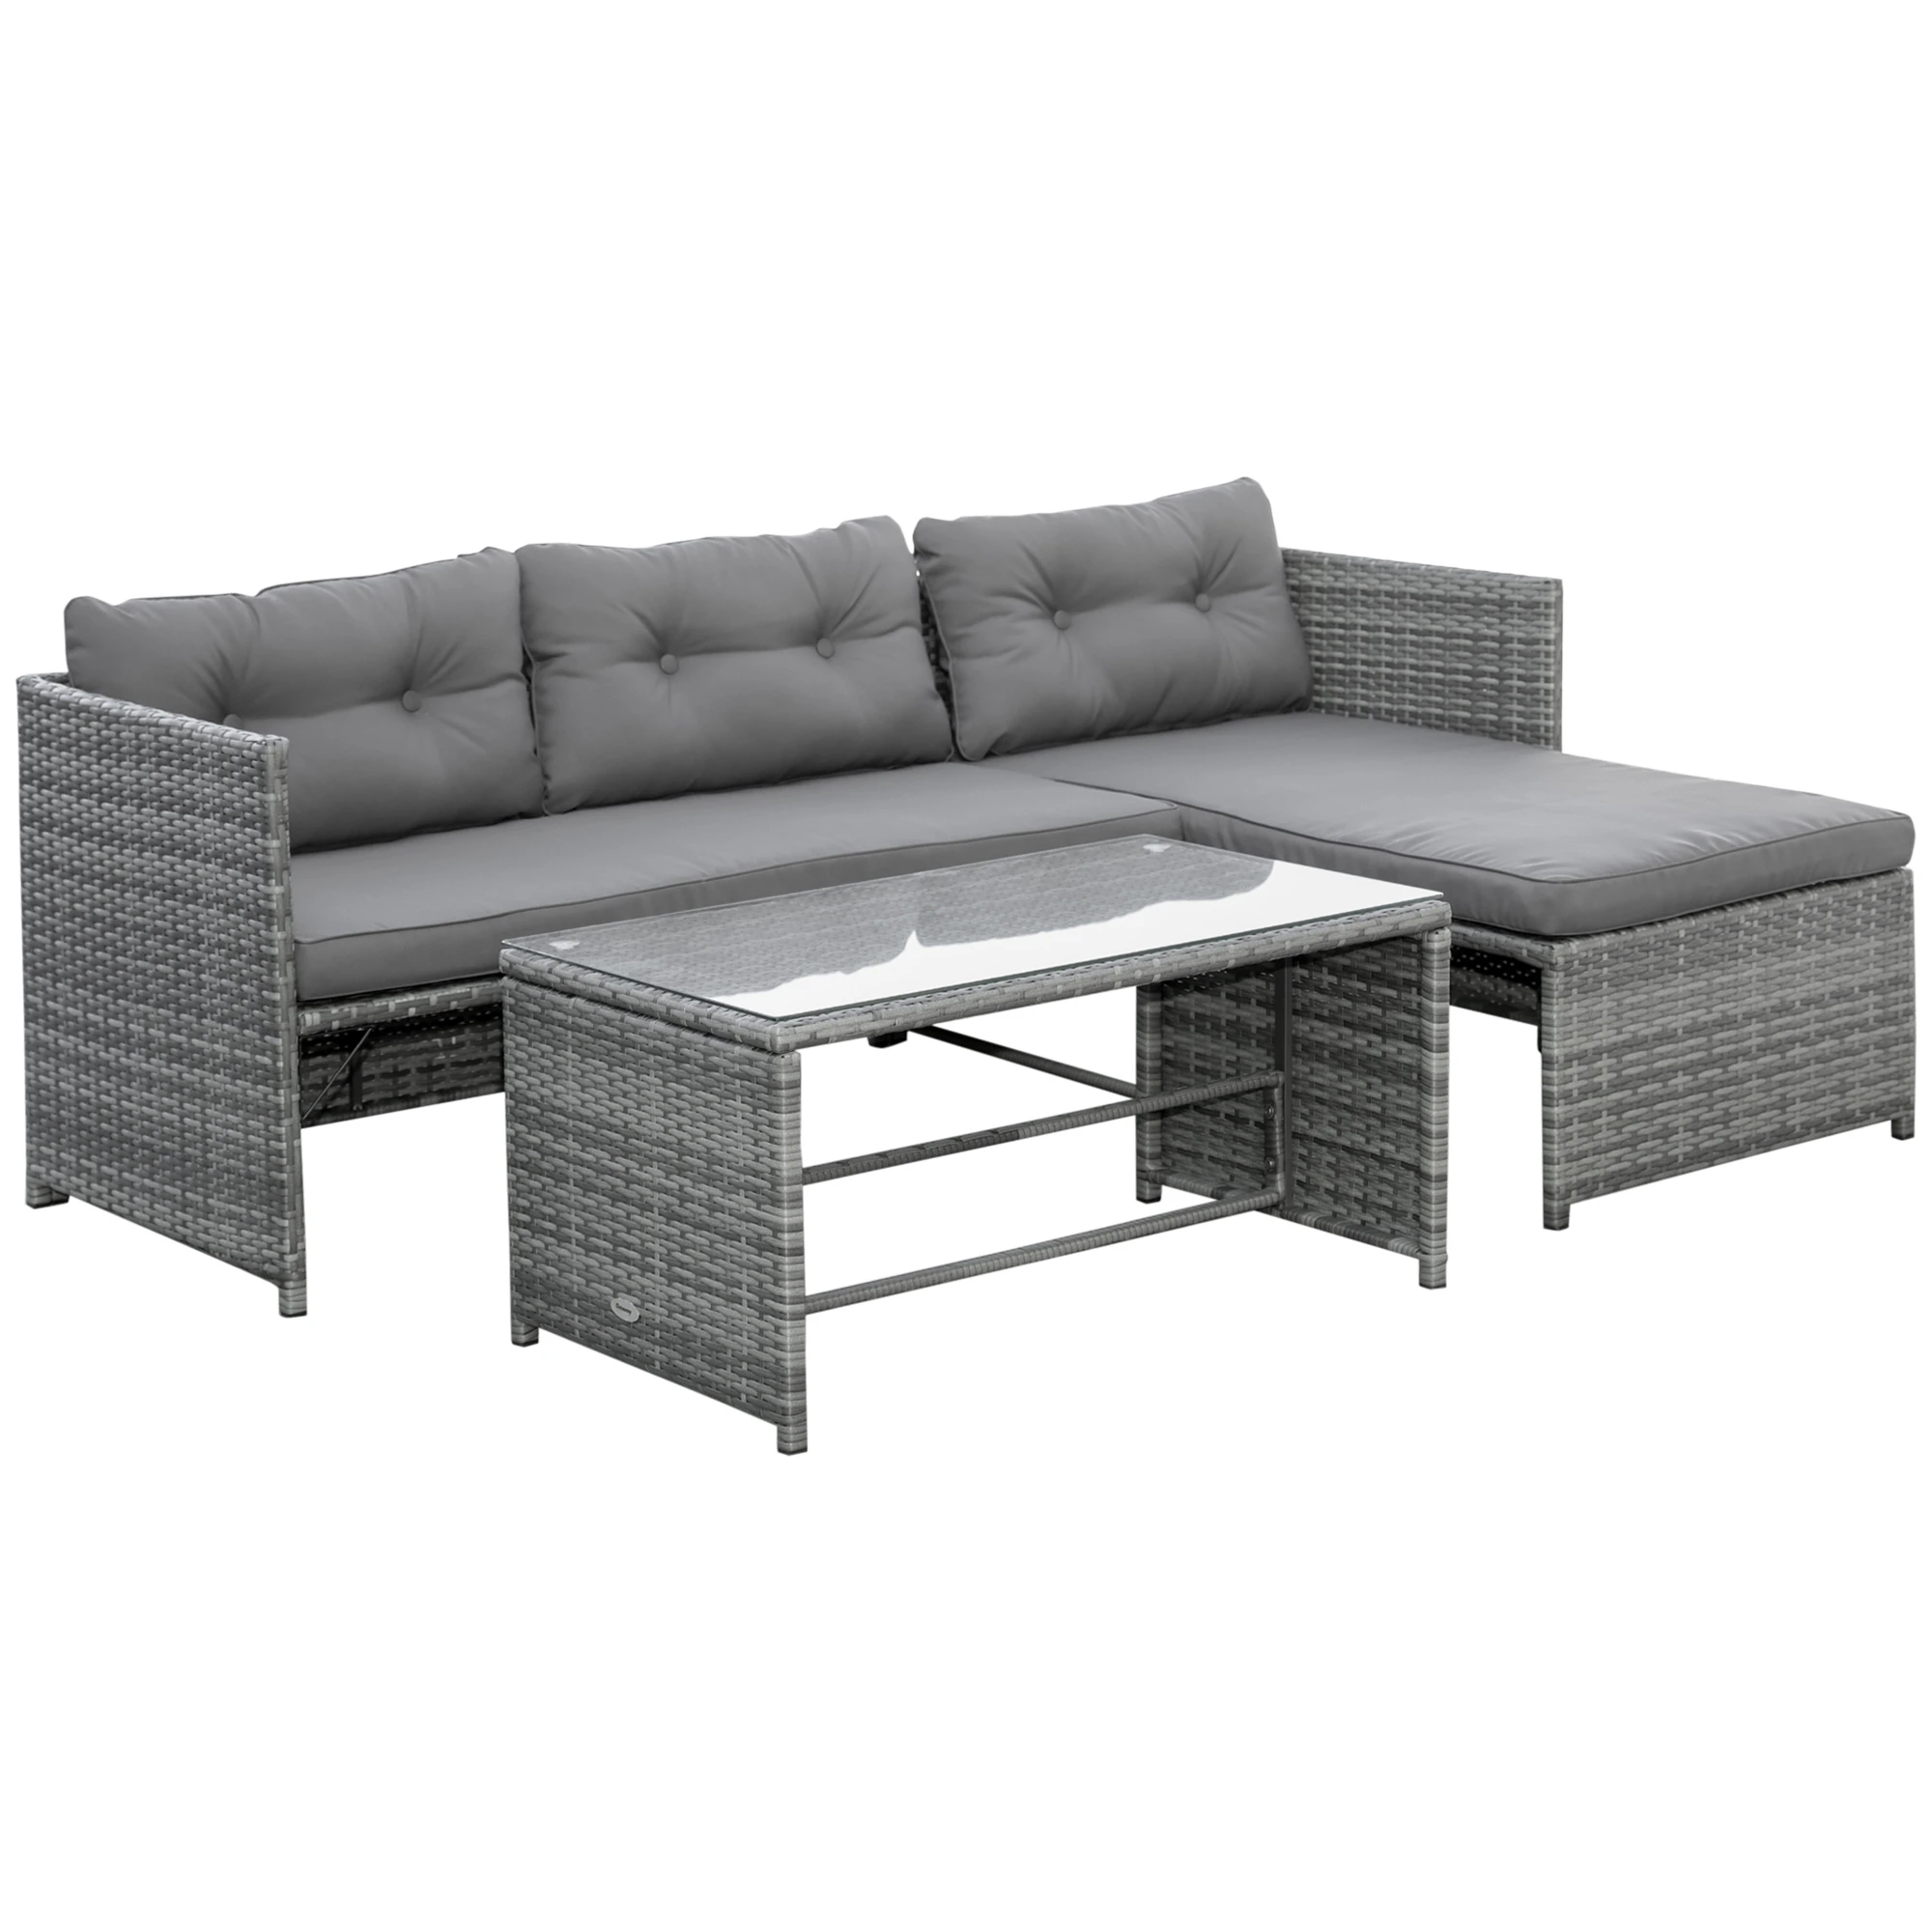 Flash Furniture Commercial Grade Indoor-Outdoor Steel Folding Patio Table